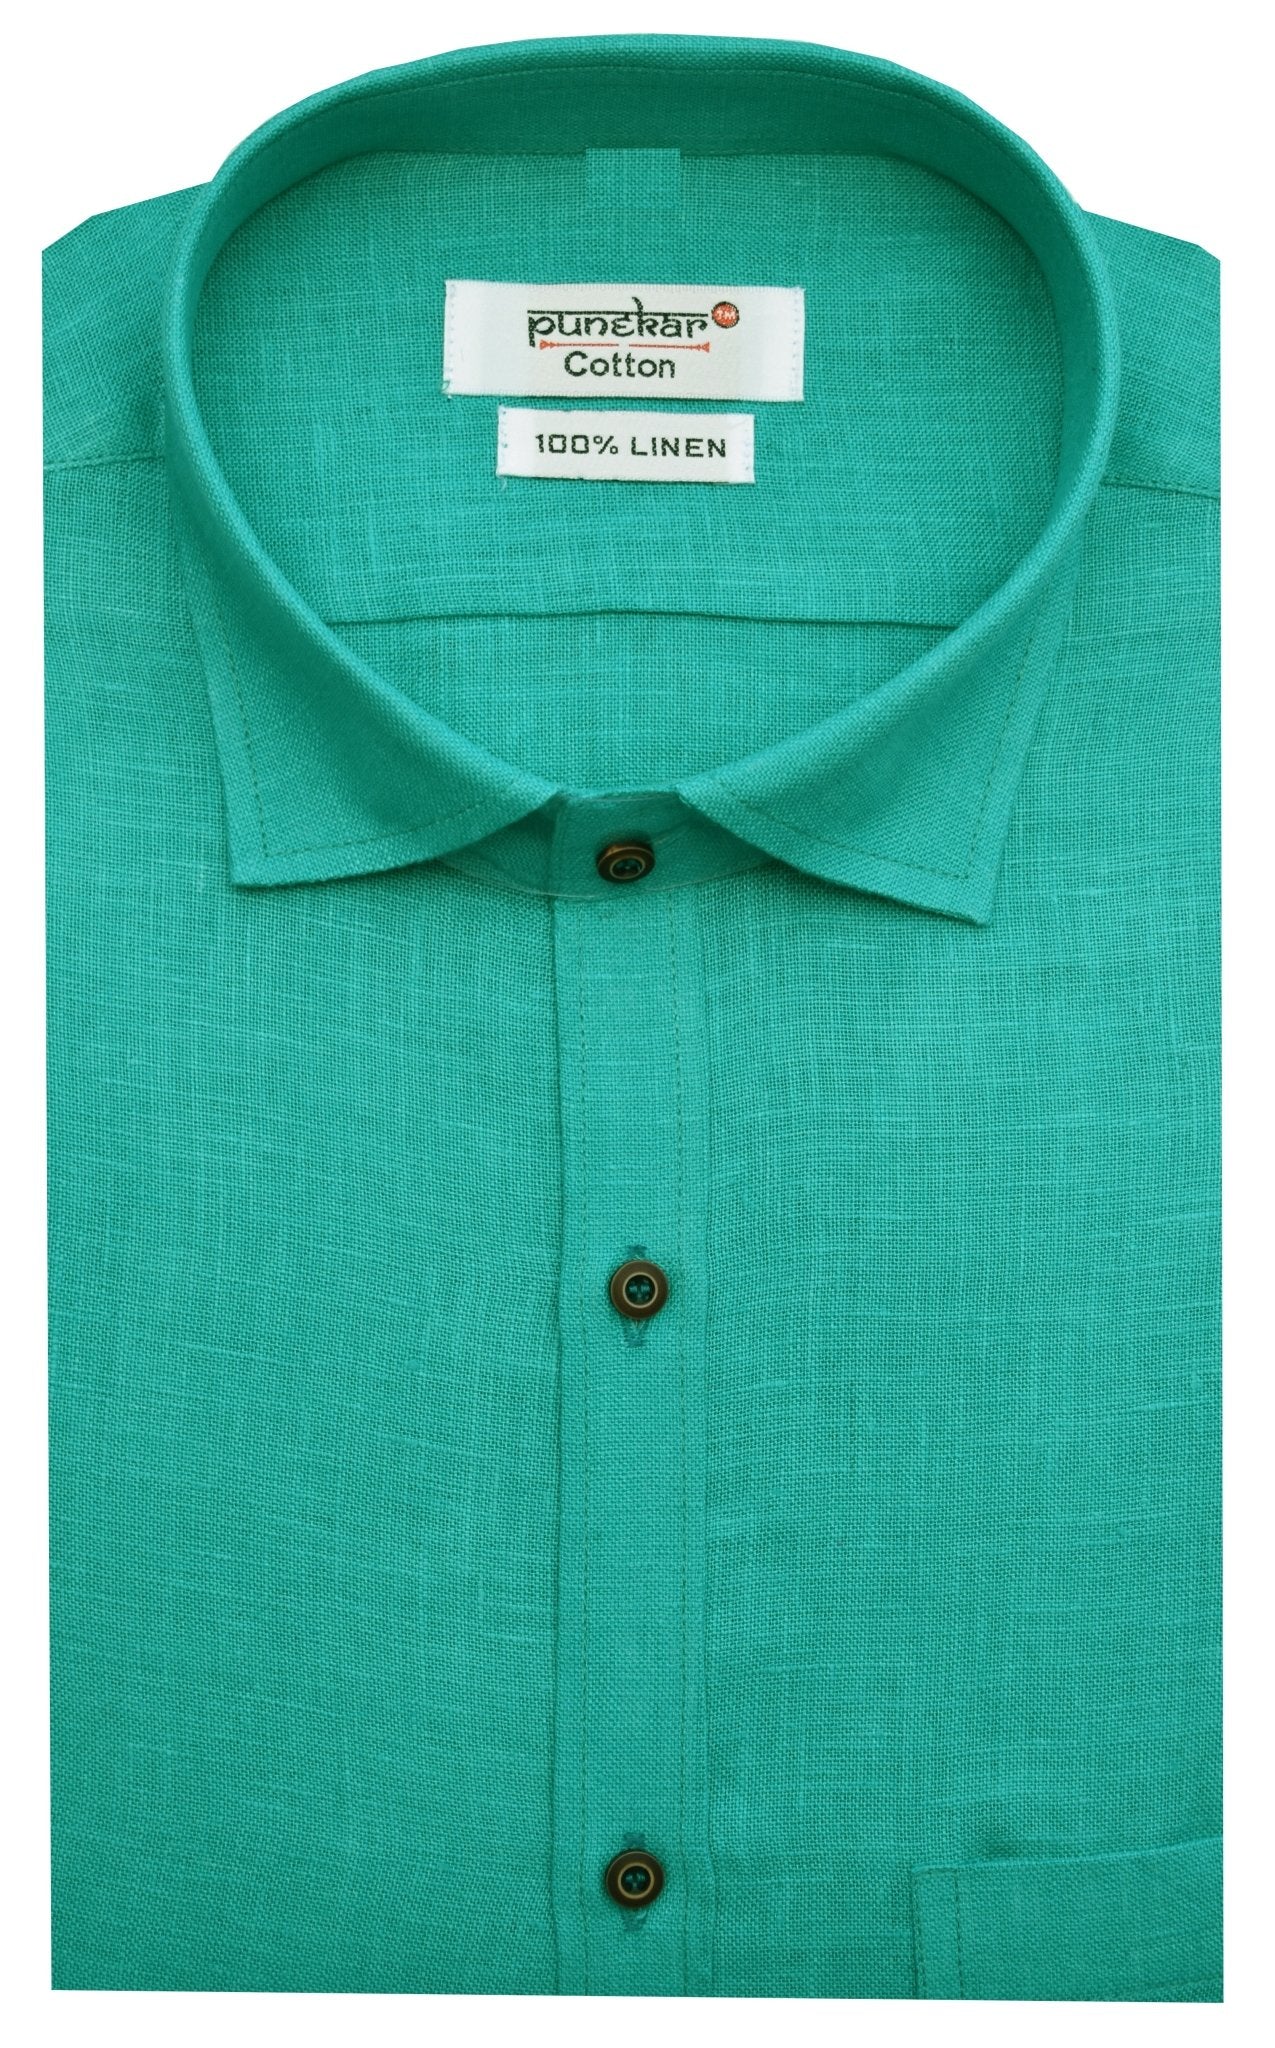 Punekar Cotton Green Color Formal Linen shirts for Men's